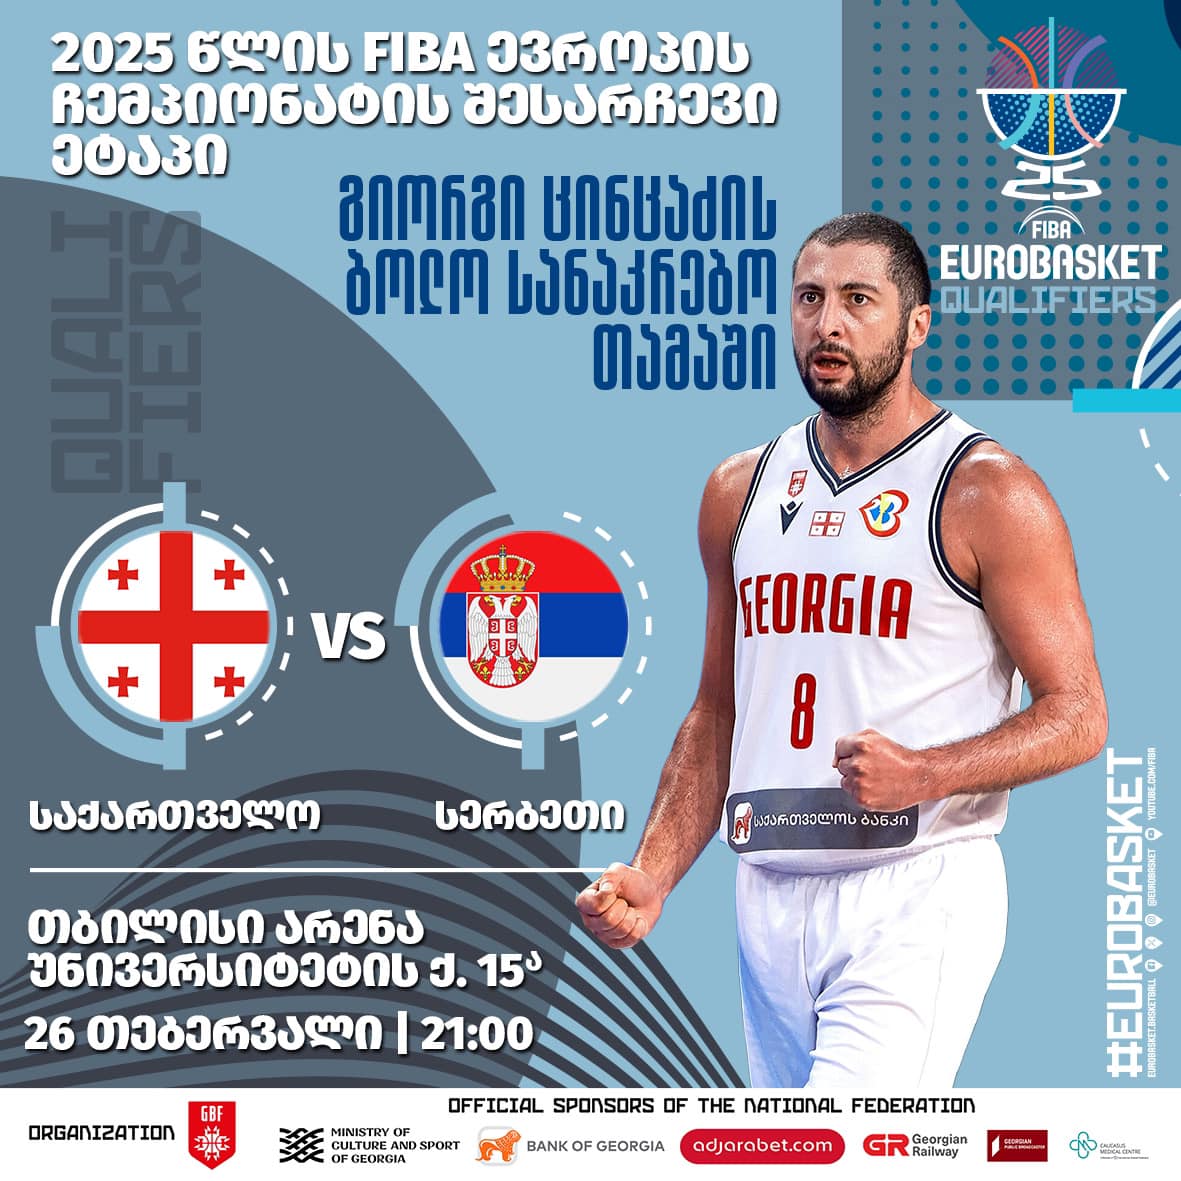 Georgia VS Serbia Tickets are on sale!